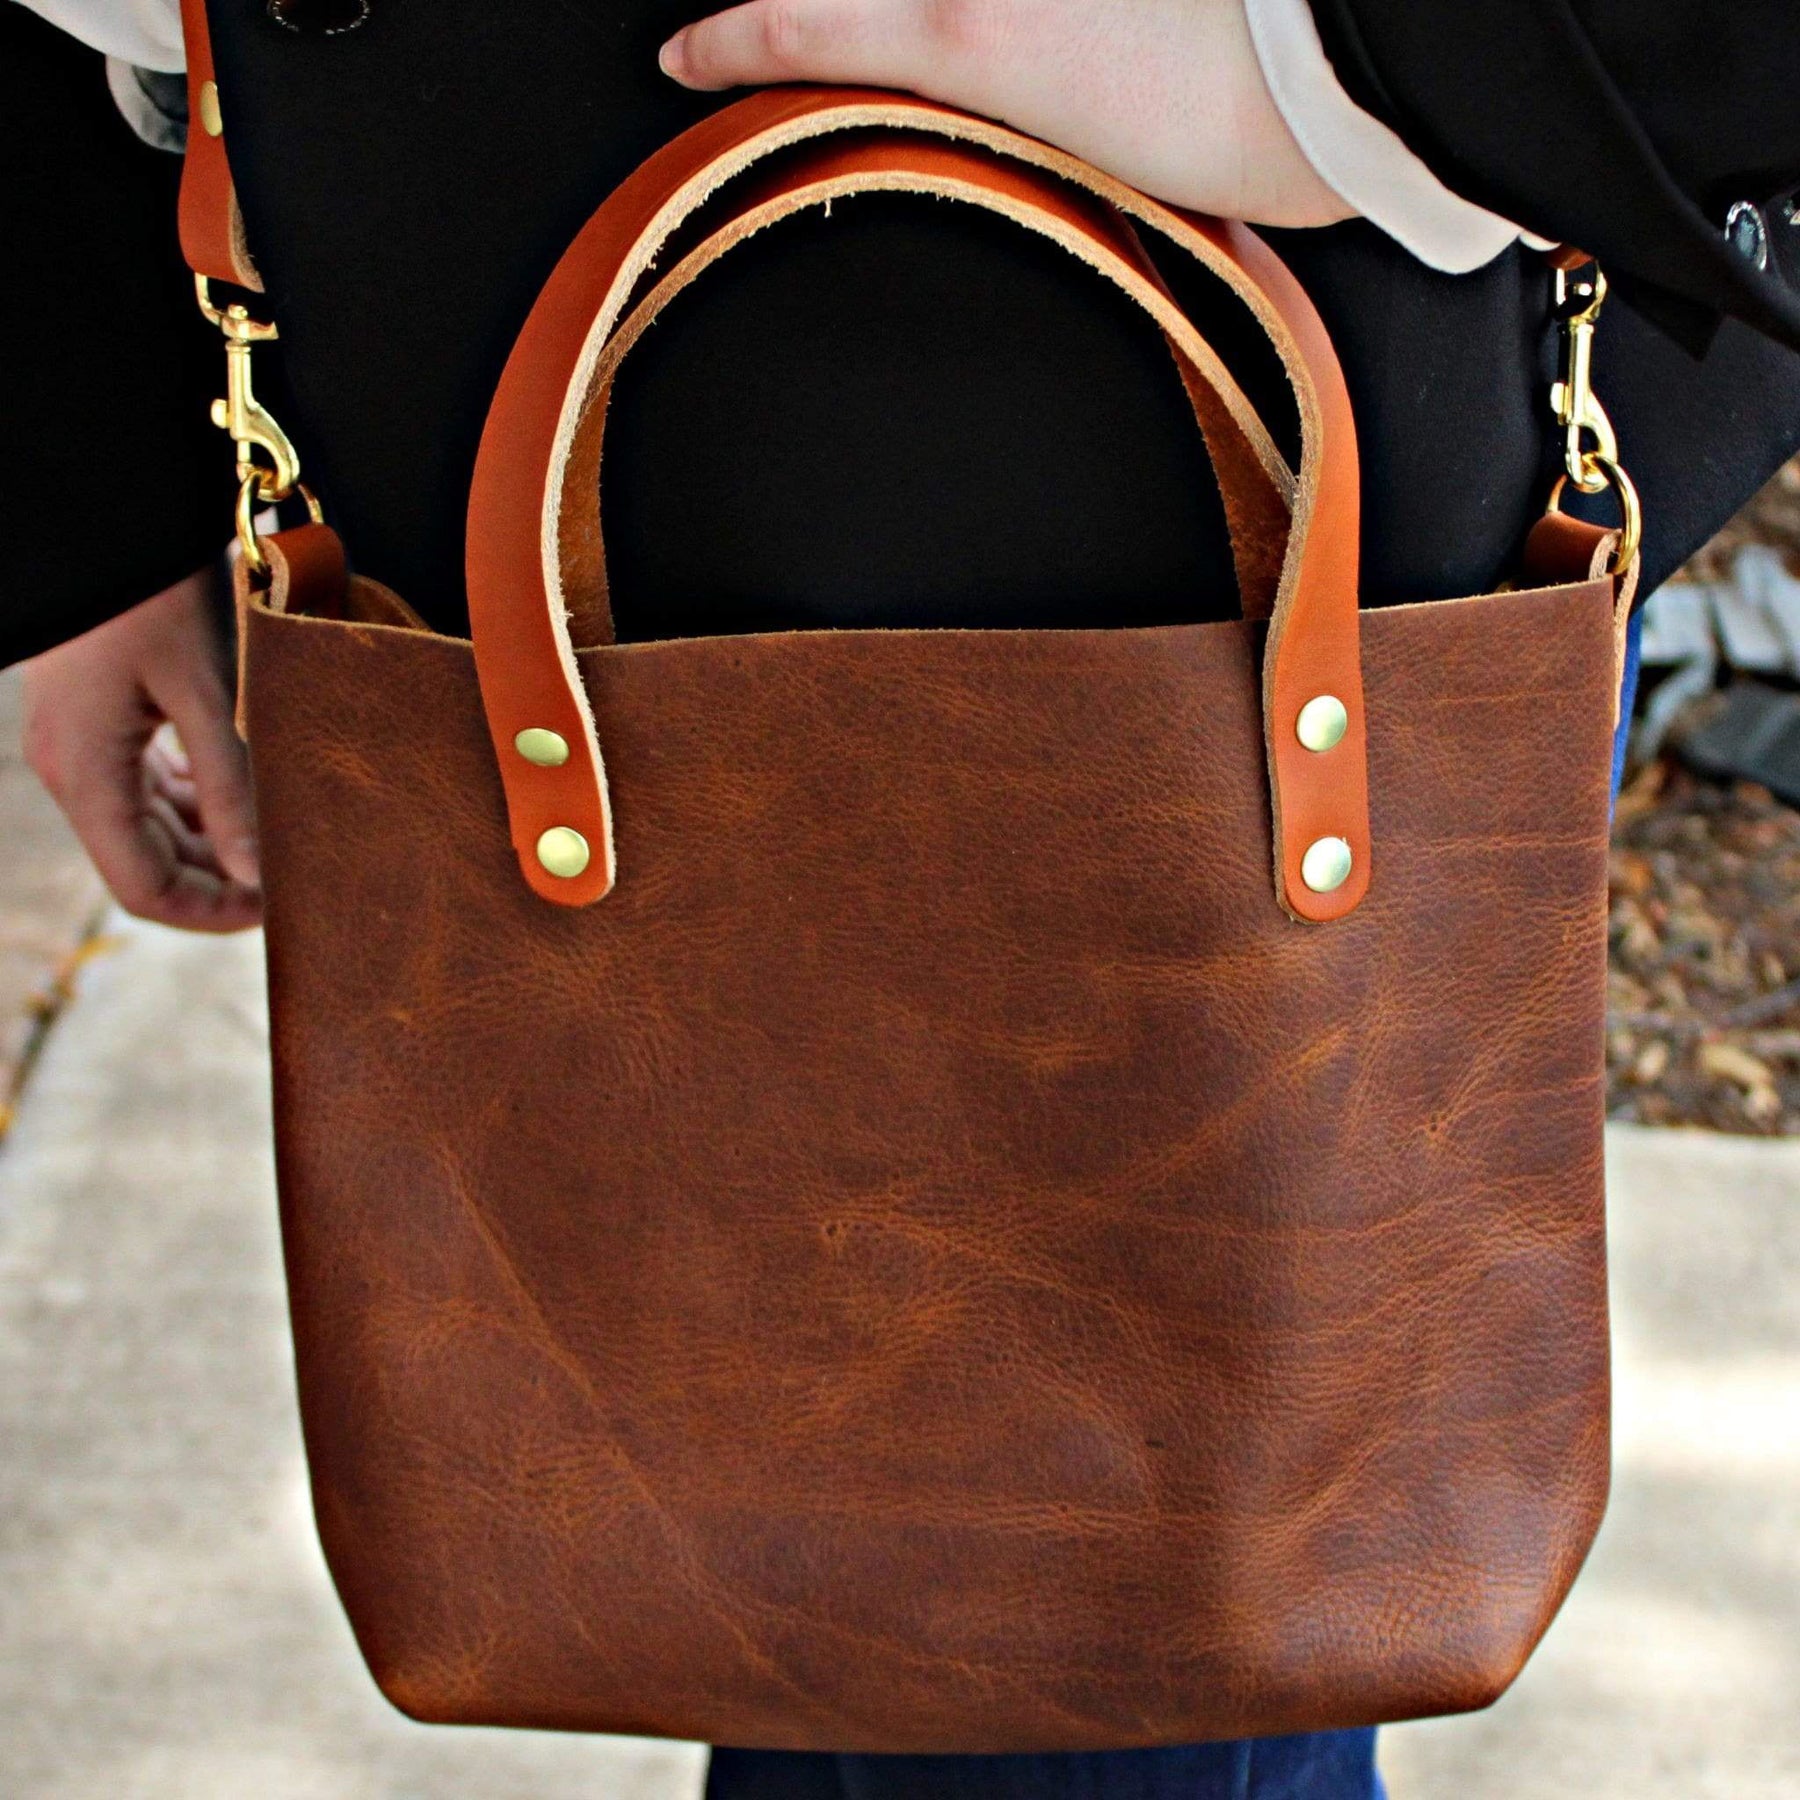 Veg Tan Leather Flap Over Handbag - Crossbody or Shoulder